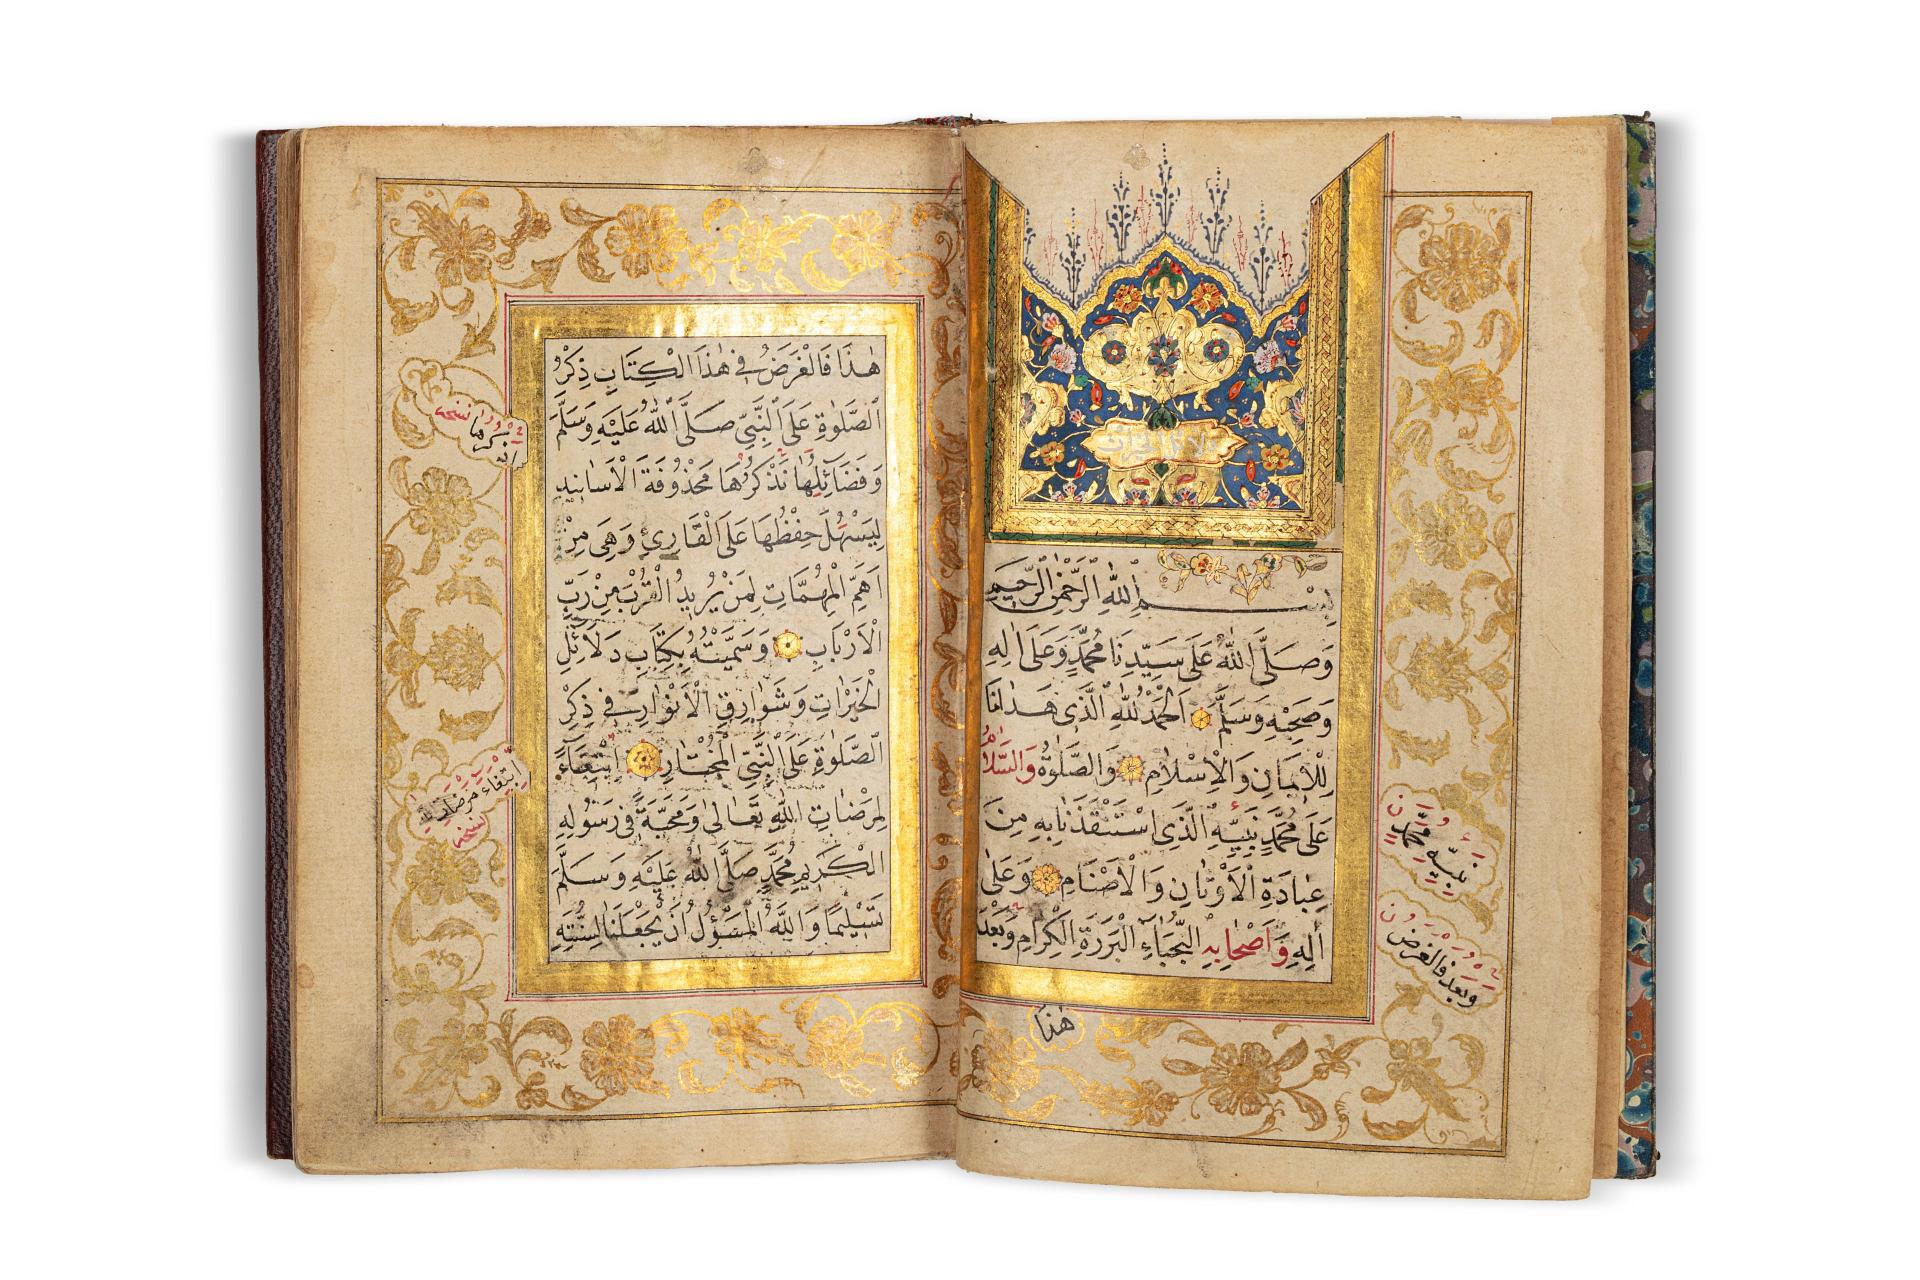 Muhammad b sulayman al jazuli dalail al khayrat livre de prieres page1